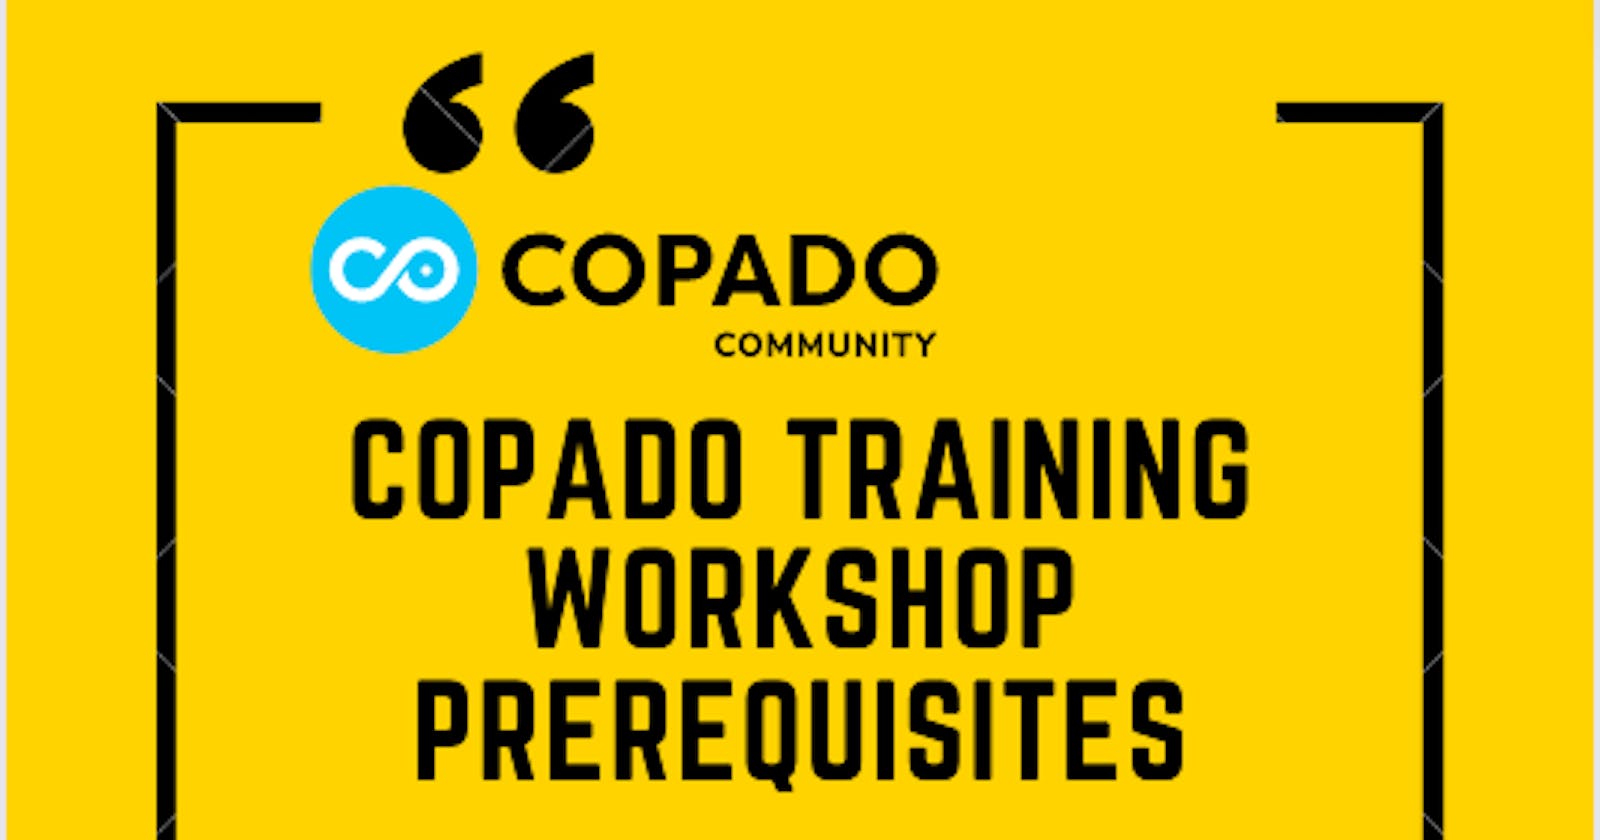 COPADO Training Workshop Prerequisites